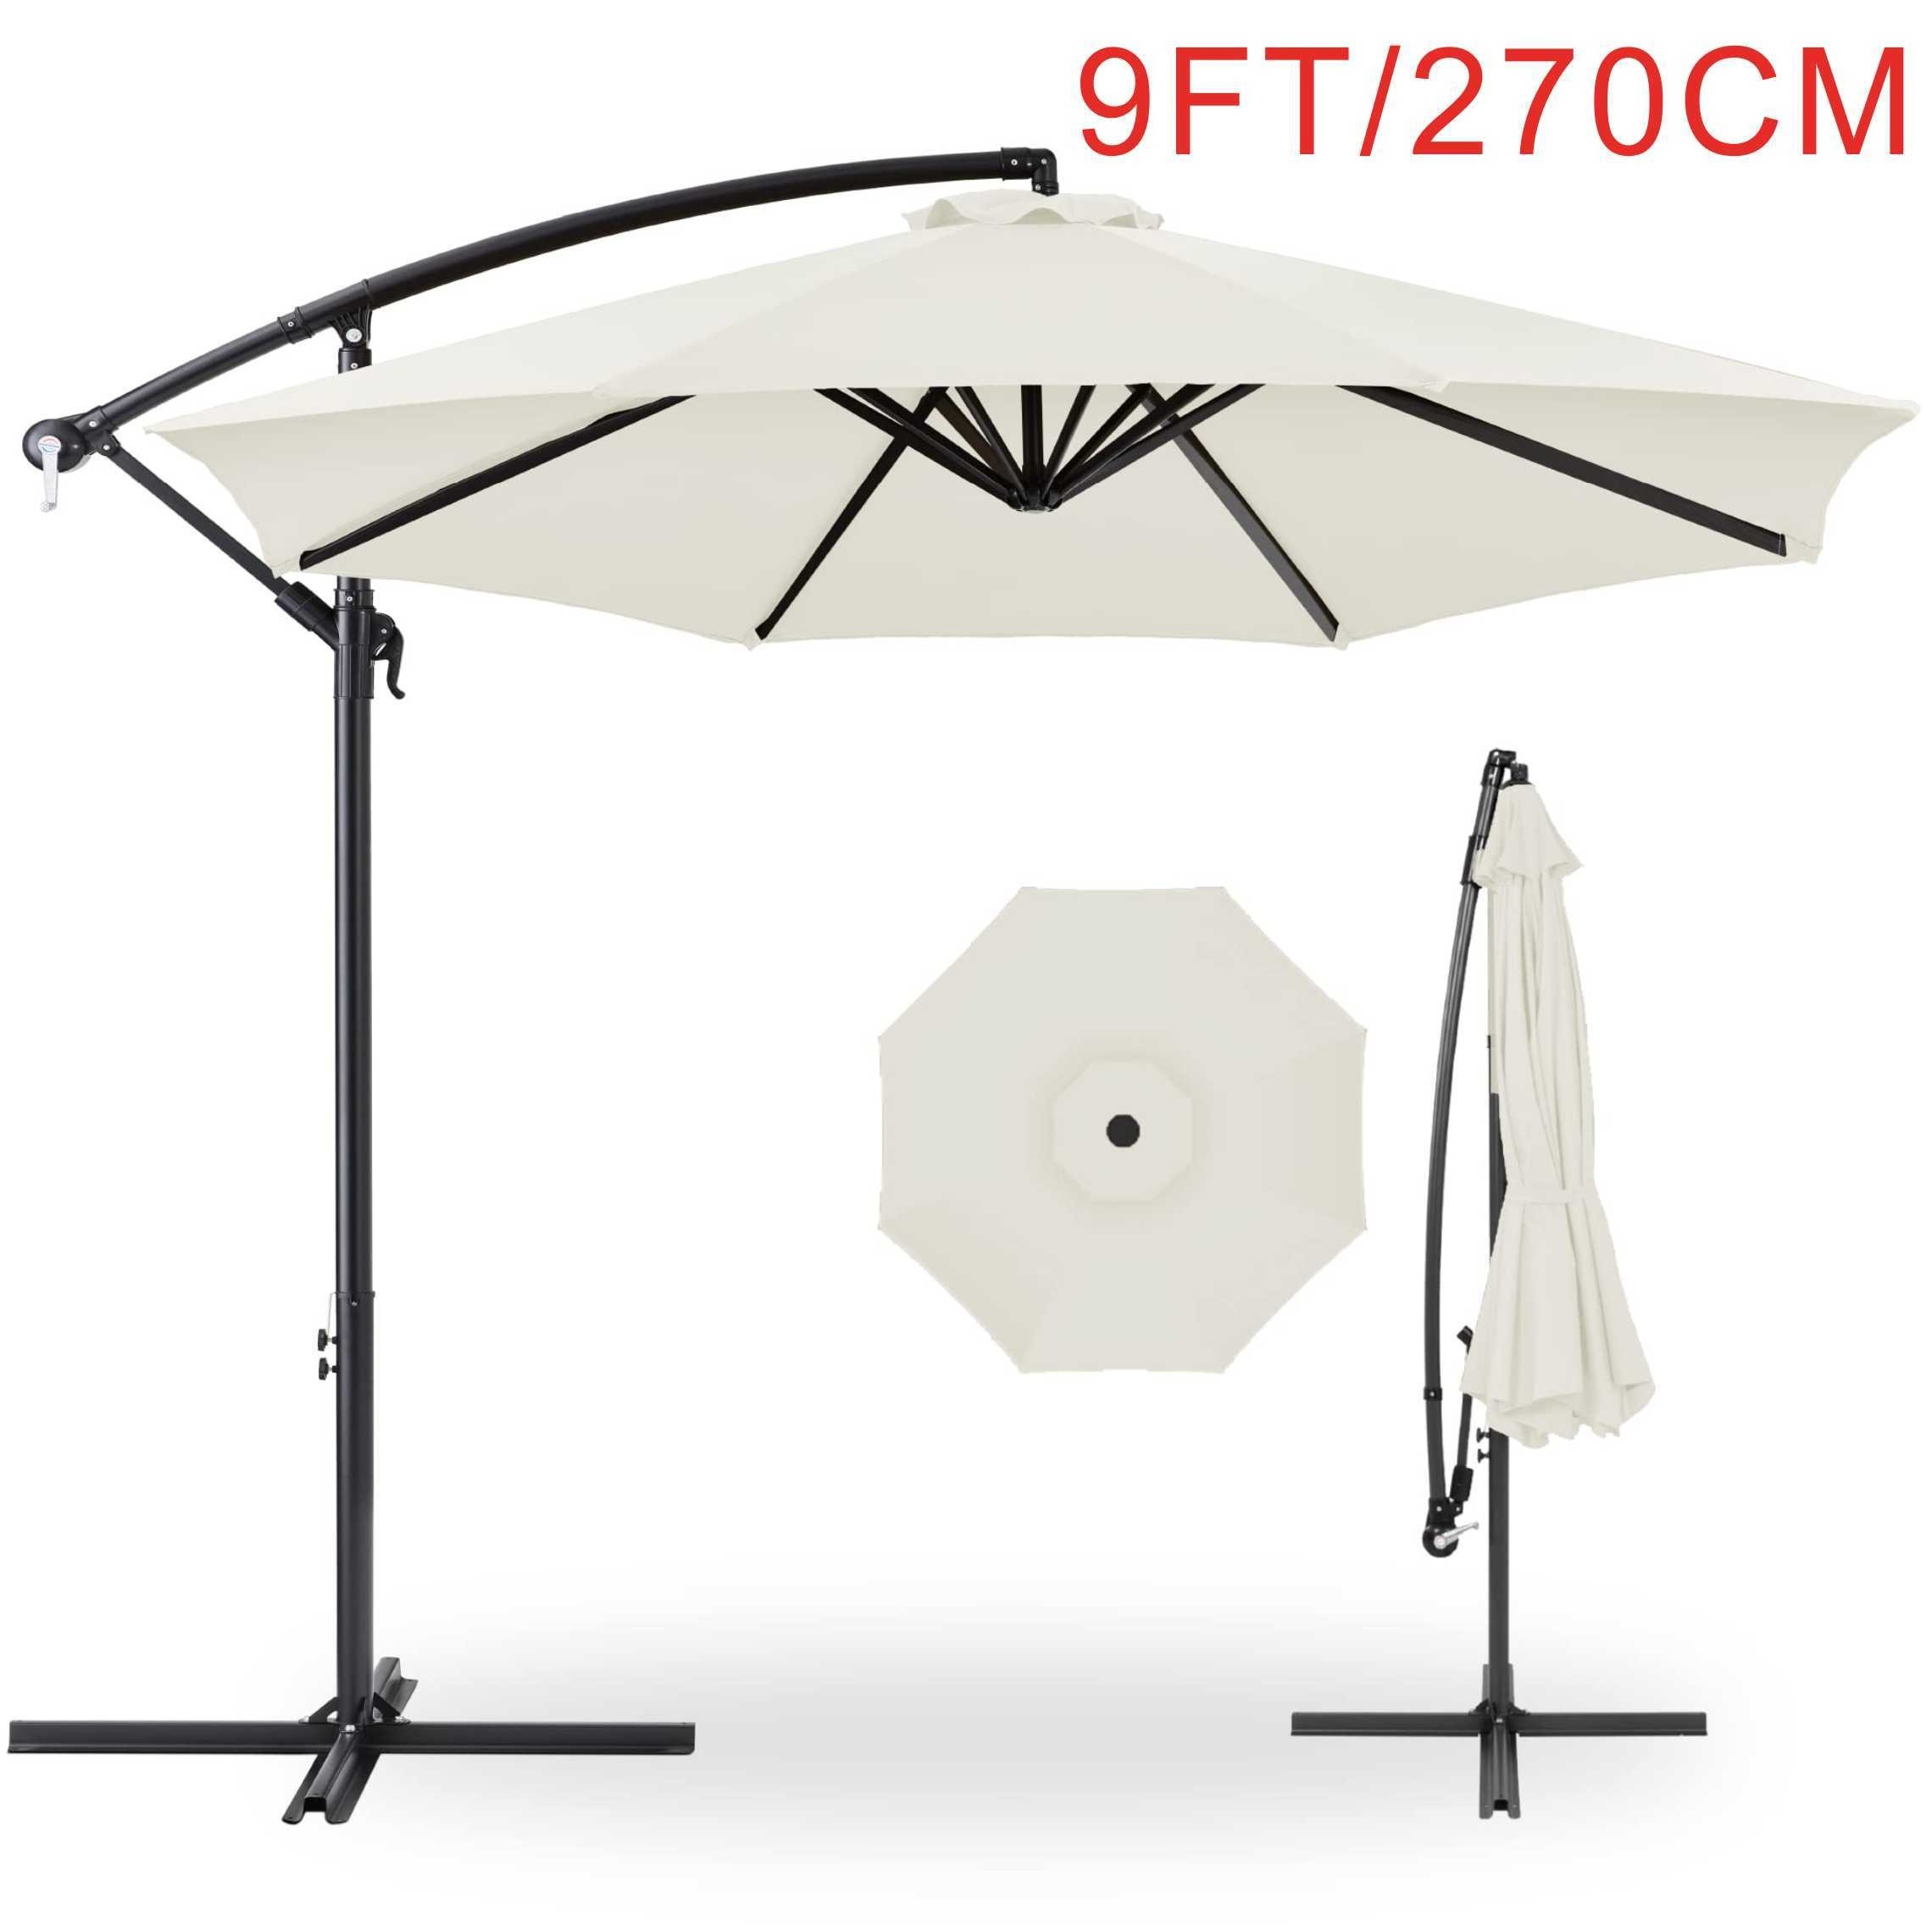 270cm Wide Adjustable Fishing Umbrella